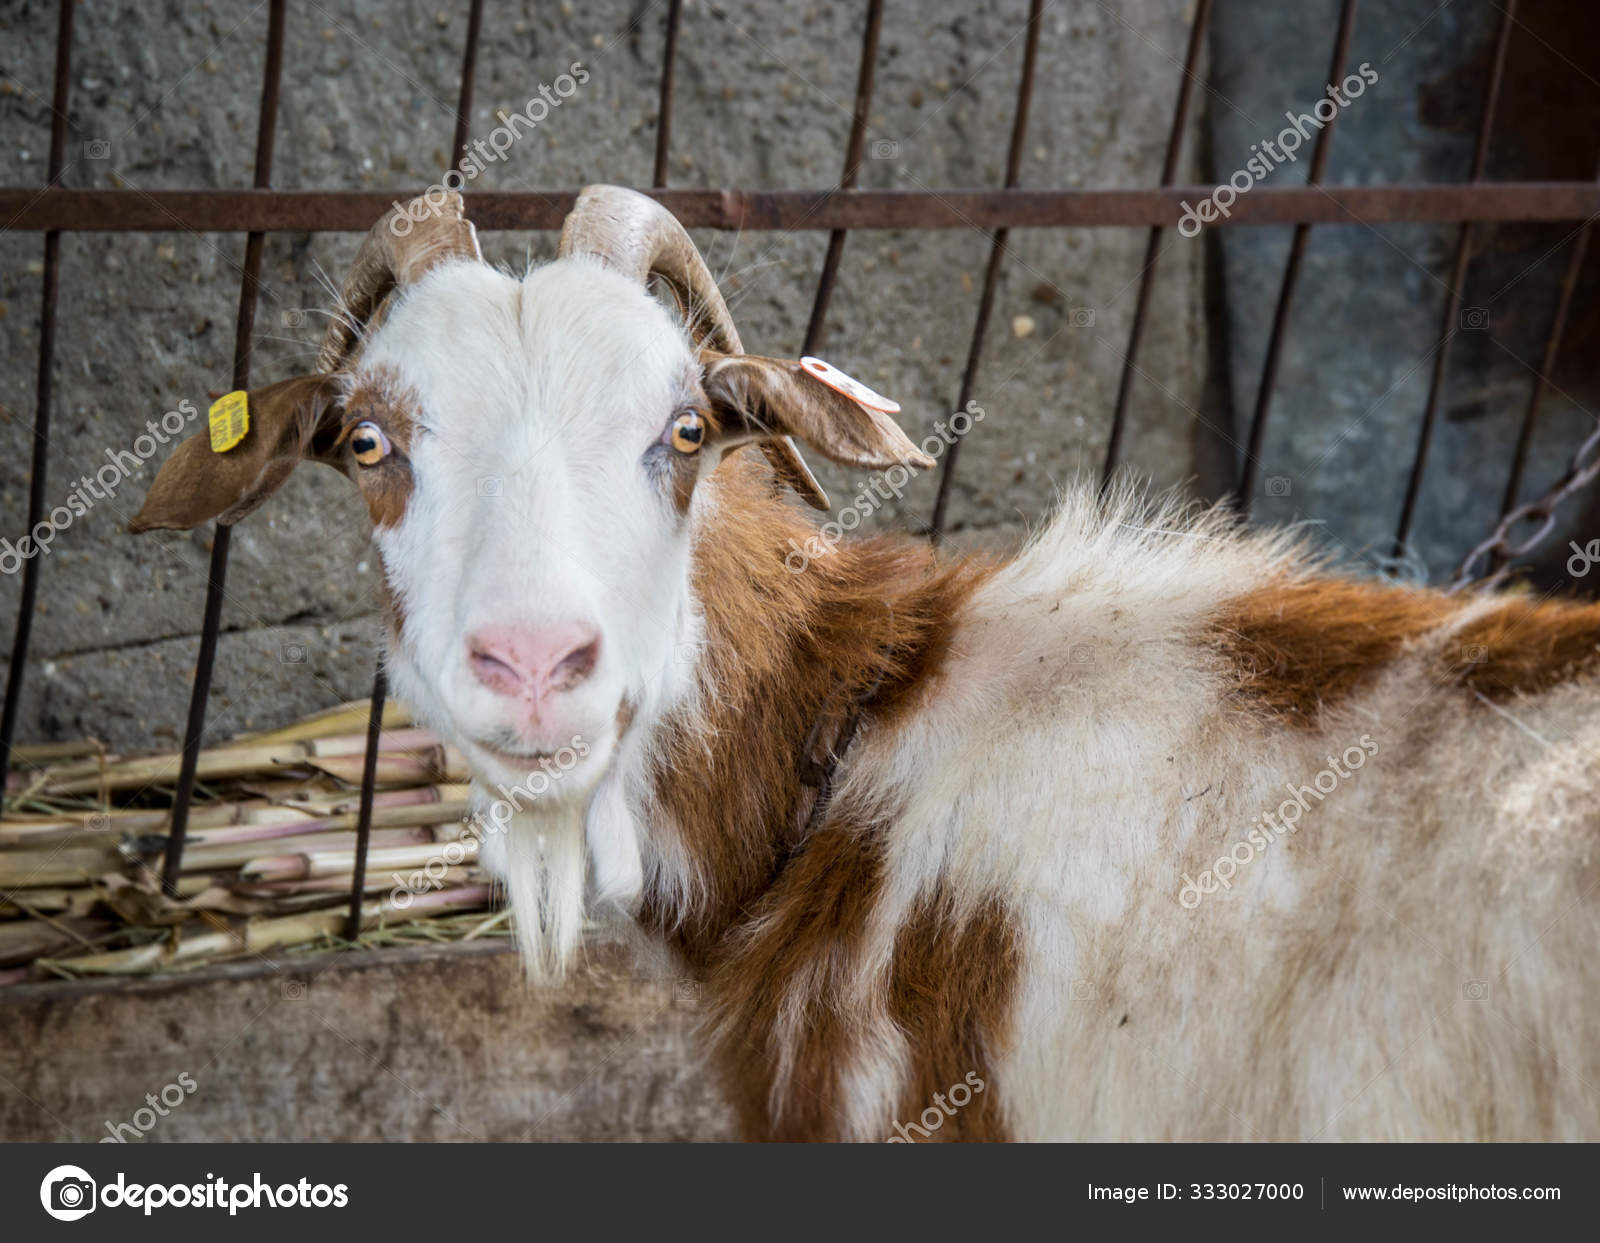 Motley Goat Looking Camera Animal Portrait Backyard Metal Fence Stock Photo